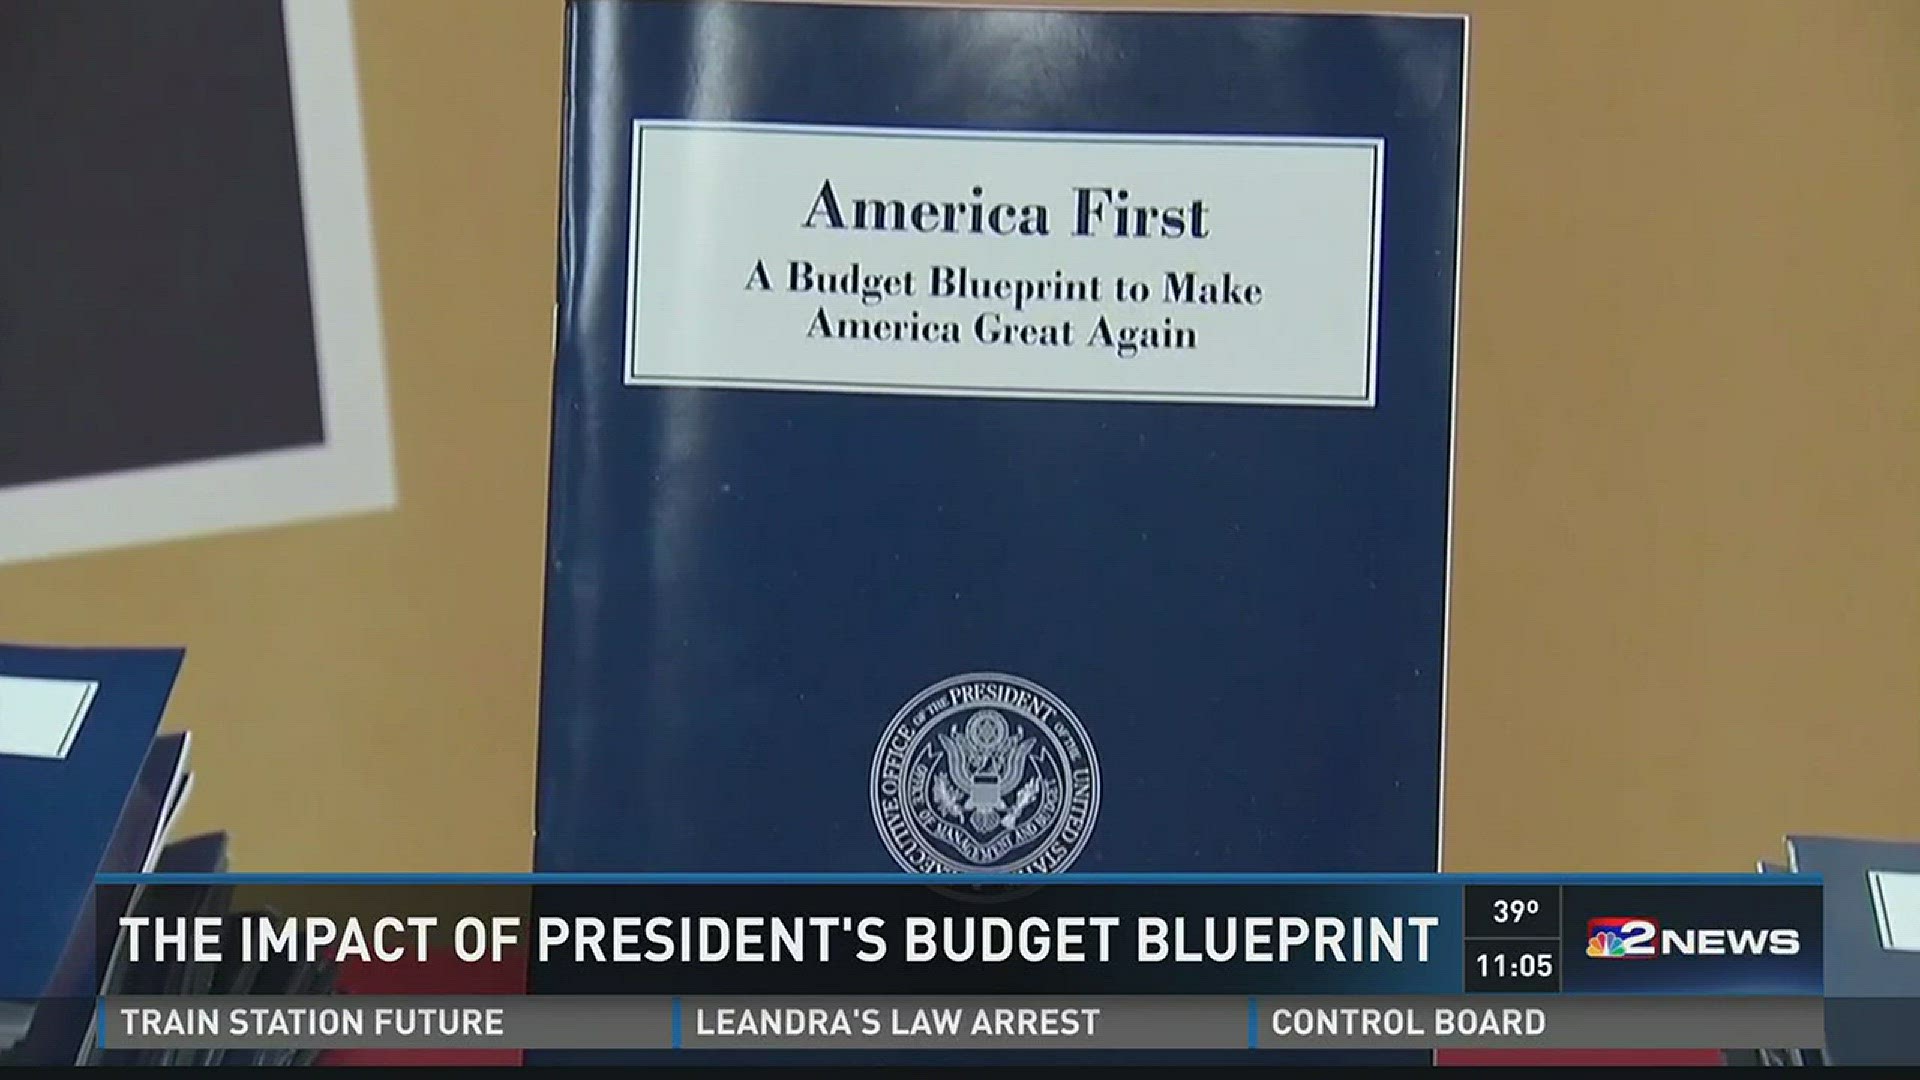 The impact of President Trump's budget blueprint